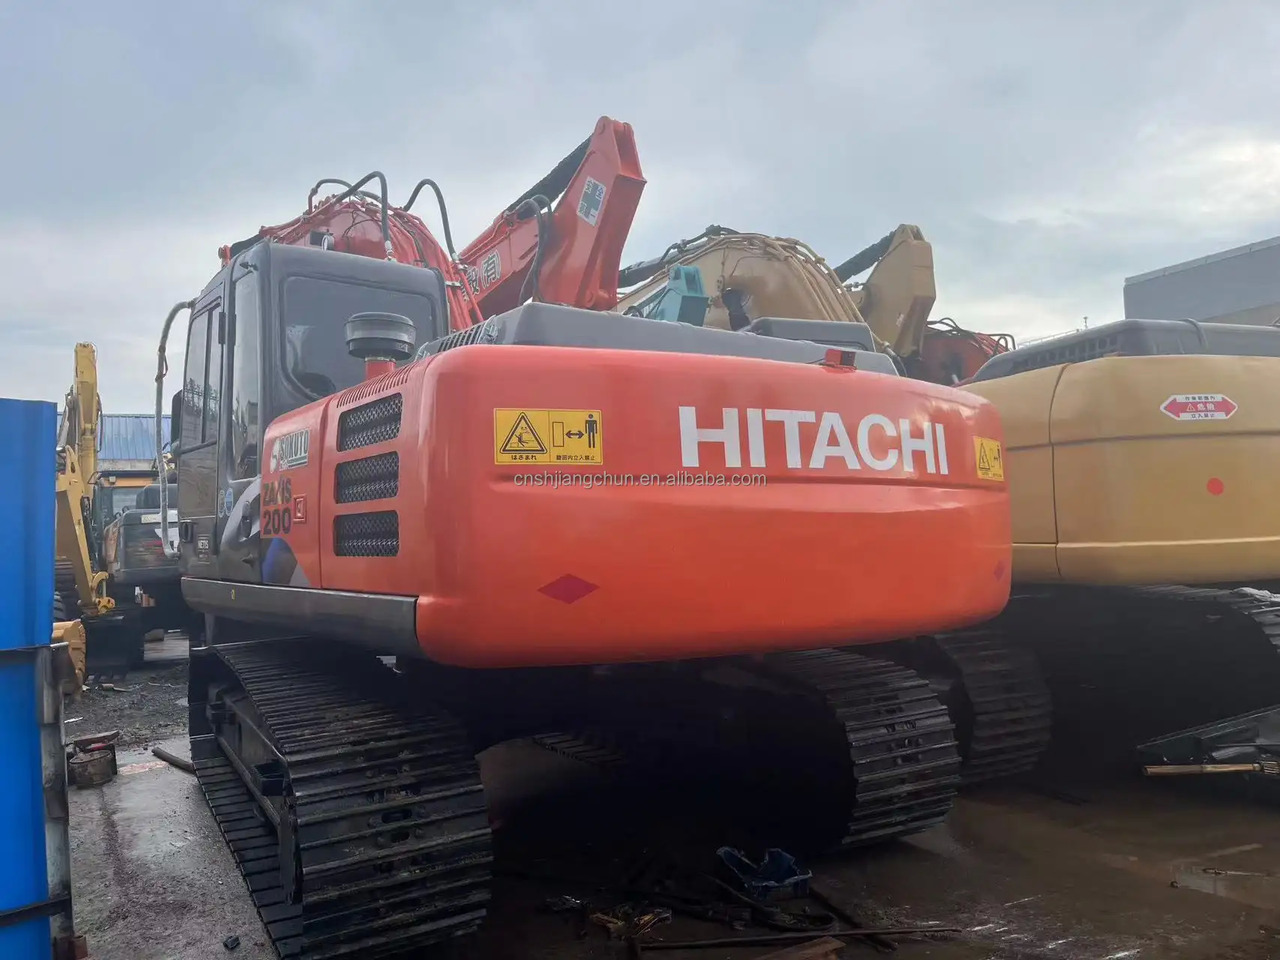 Escavadora de rastos high cost performance second hand  Hitachi ZX200-3G hydraulic crawler excavator 20 ton excavating machinery: foto 4